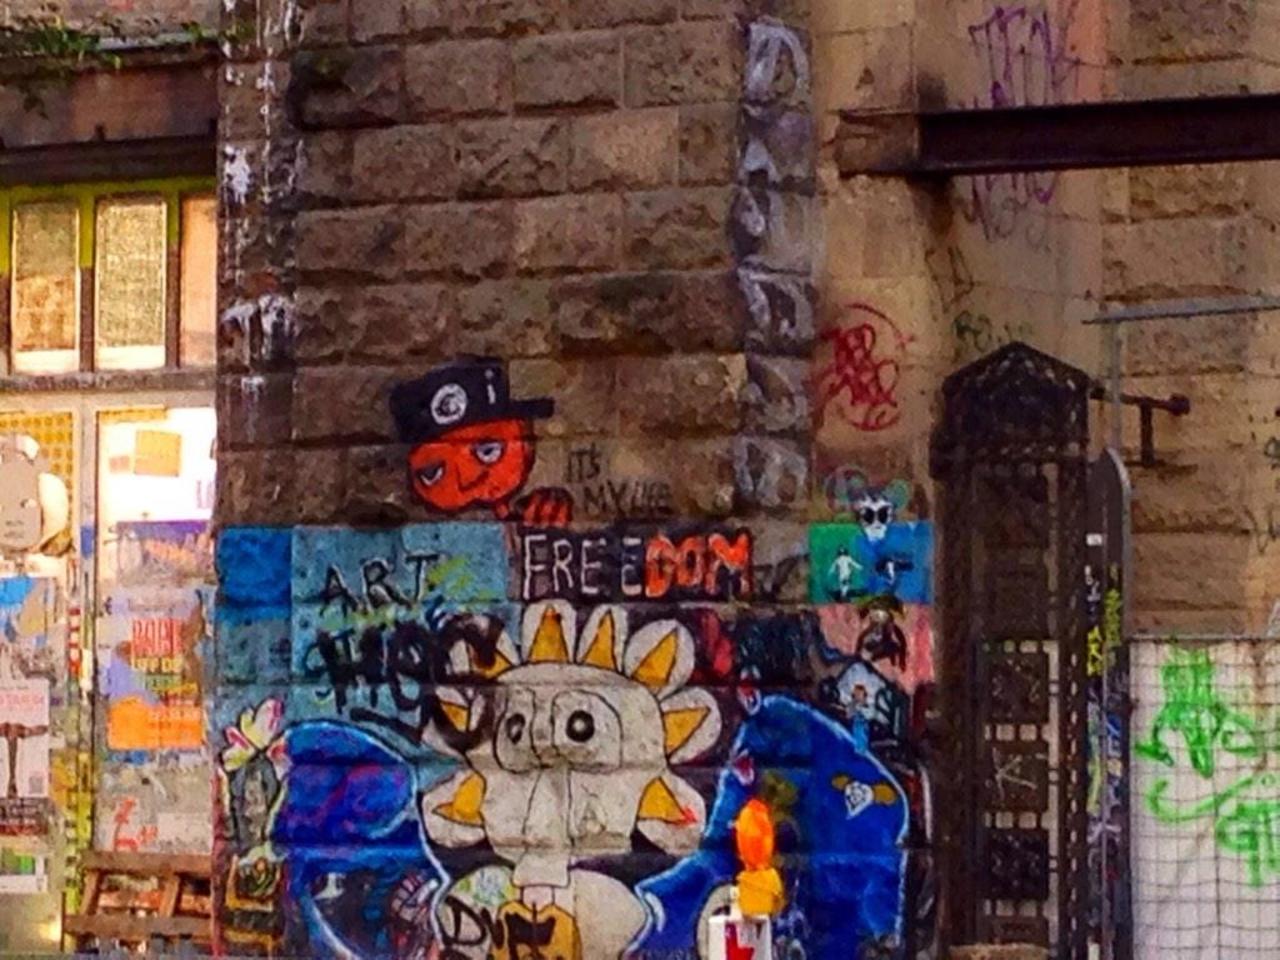 The #graffiti in #Berlin #Germany are really works of #art . #travel #wanderlust http://t.co/1BezlR7HE3